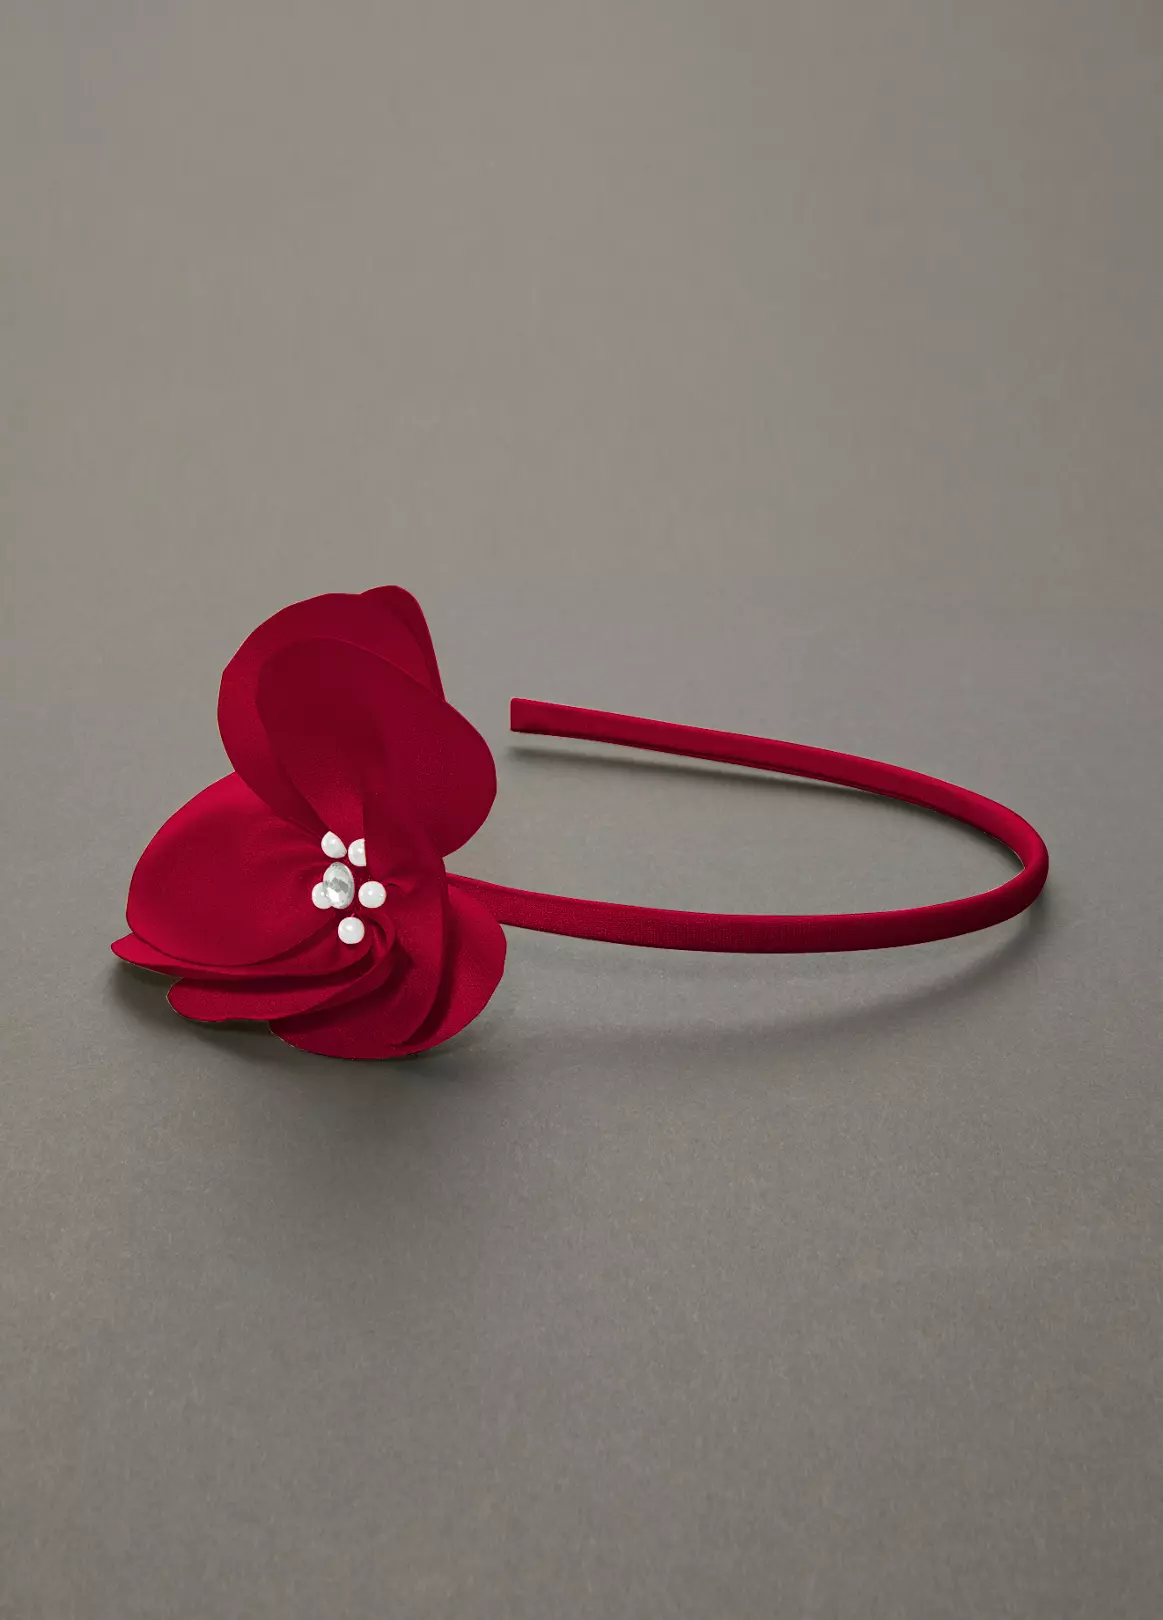 Fabric Flower Headband with Jewel Center Image